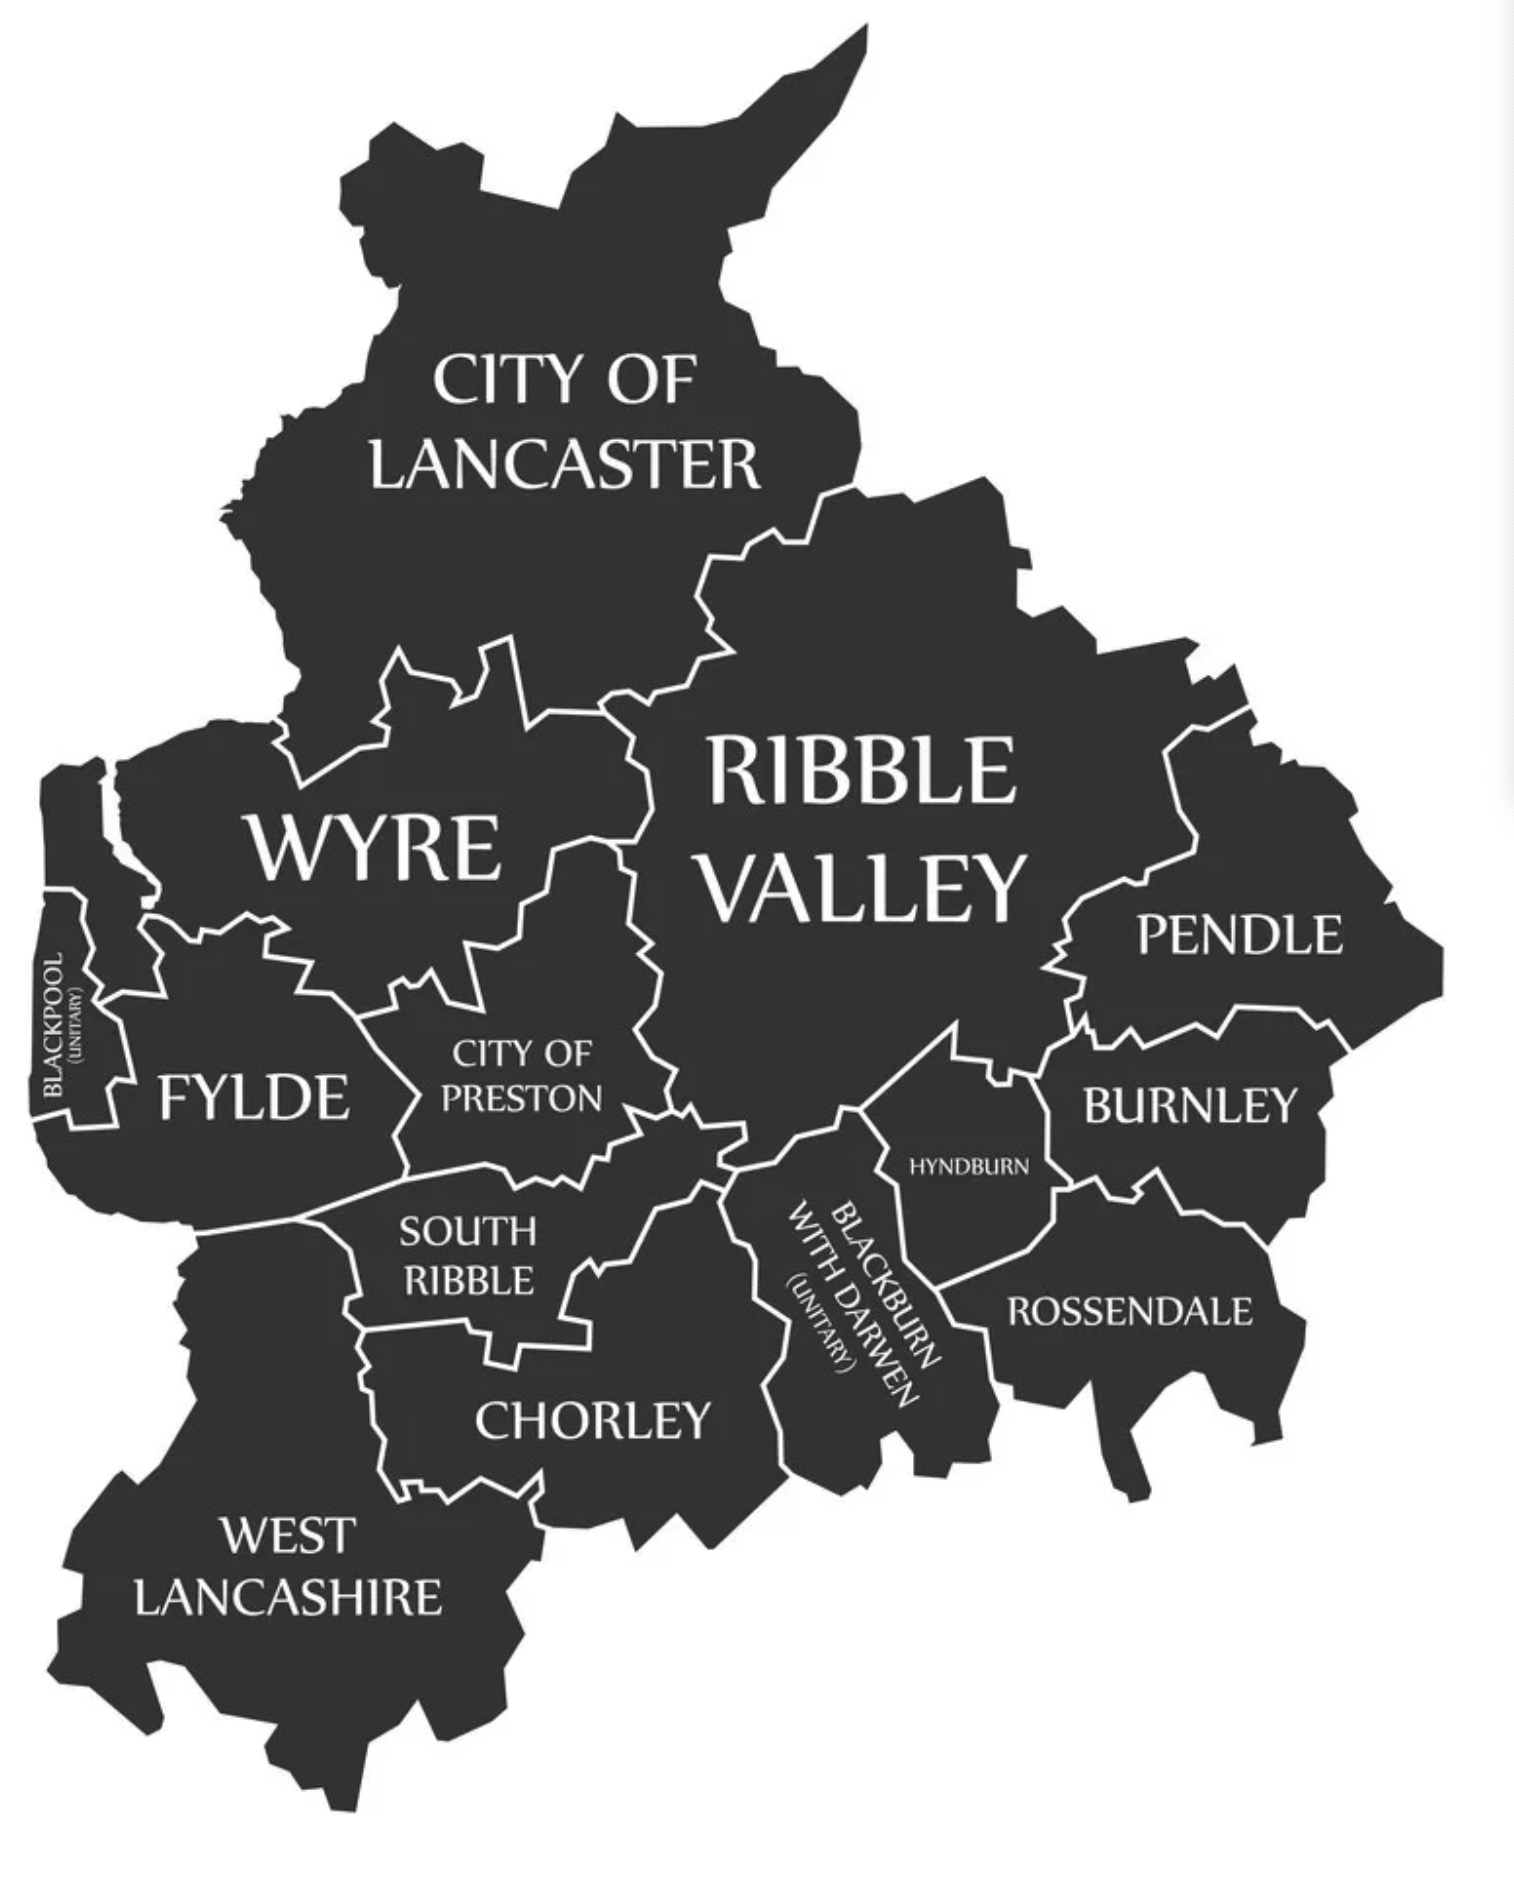 Area covered, Lancashire